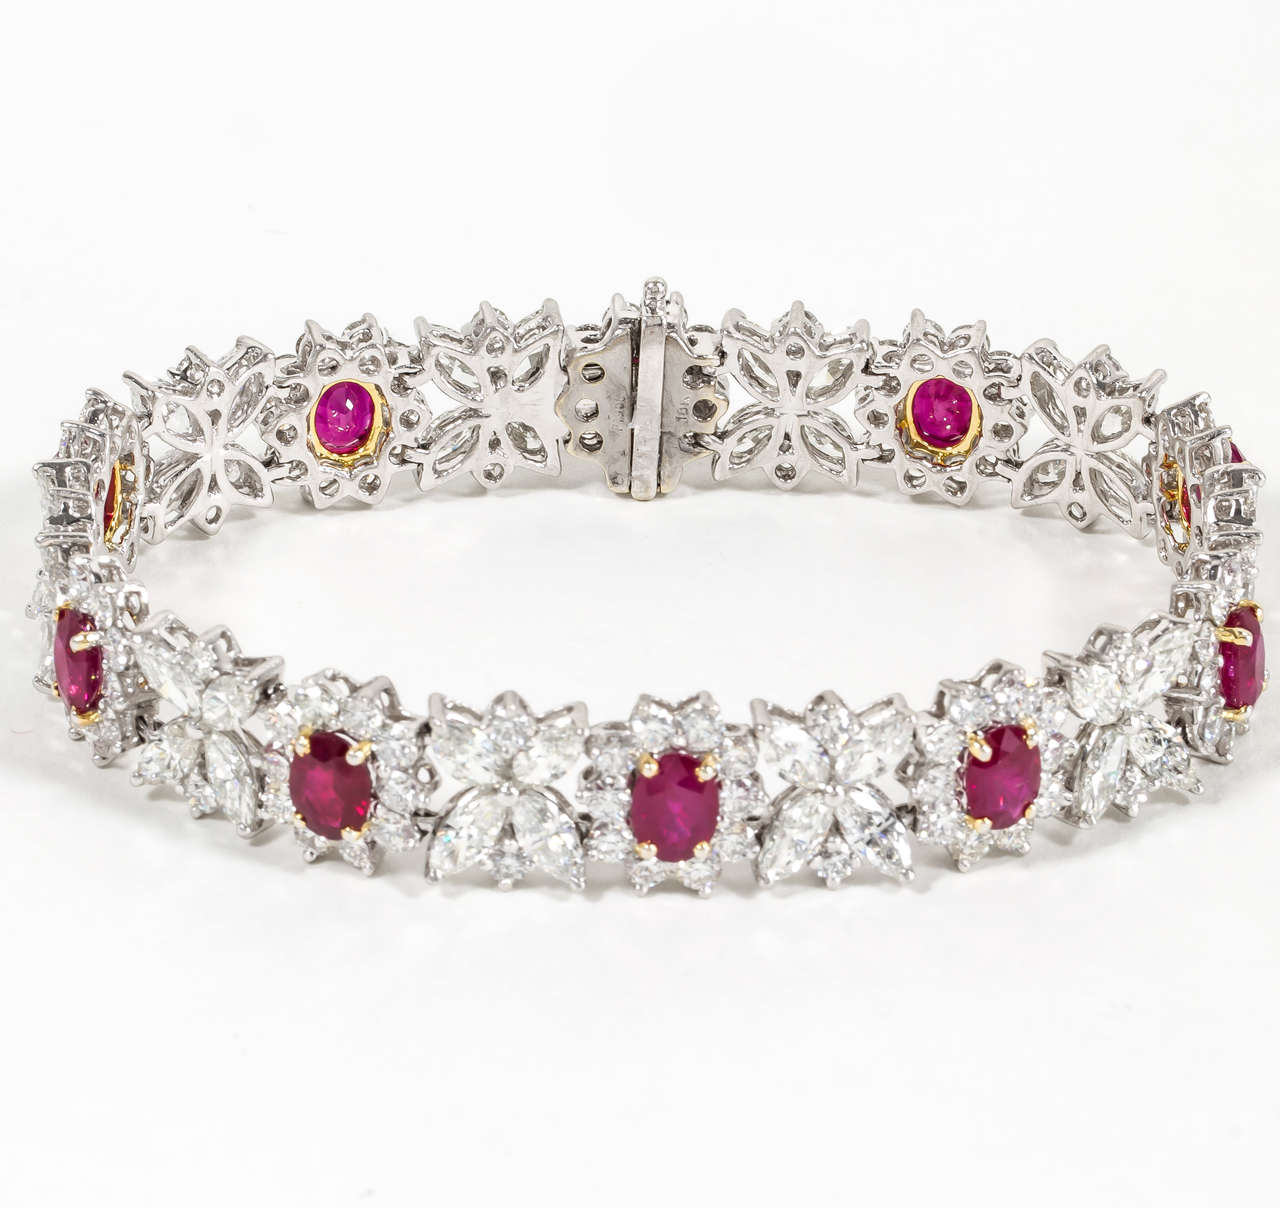 
Elegant ruby and diamond bracelet set in platinum. 

11.41 carats of oval Burma Rubys. 

Over 22 carats of beautiful white diamonds.